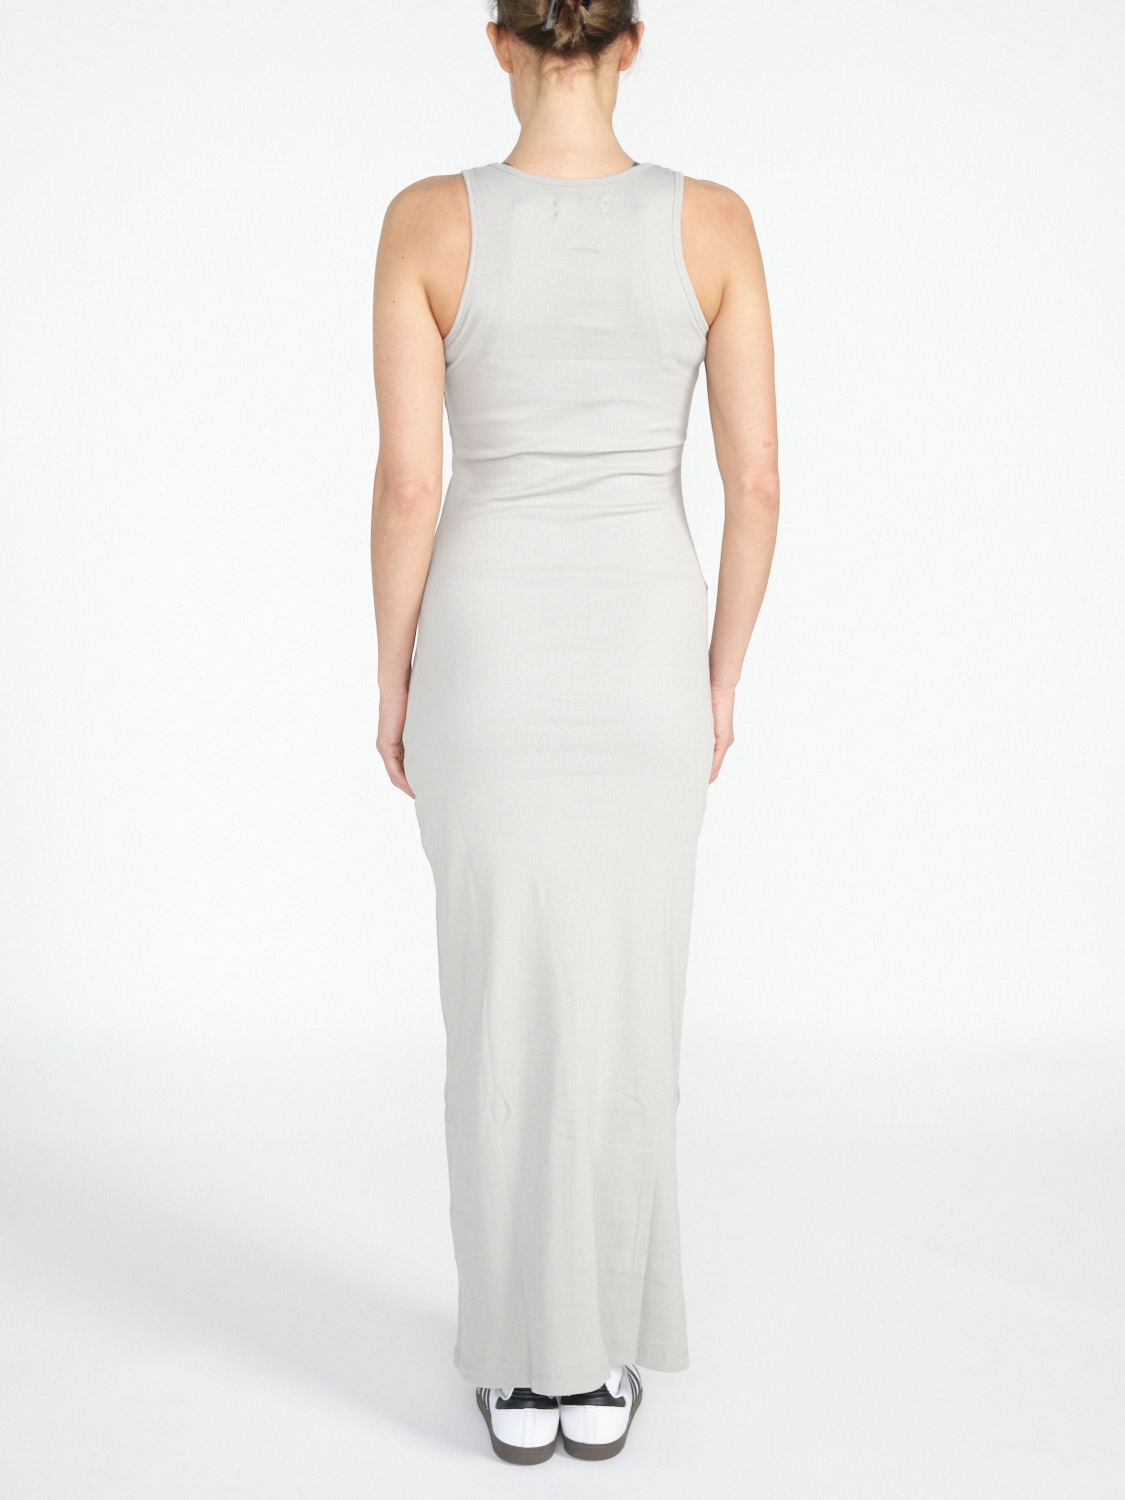 rabanne Maxi dress with velvet-look logo print  grey XS